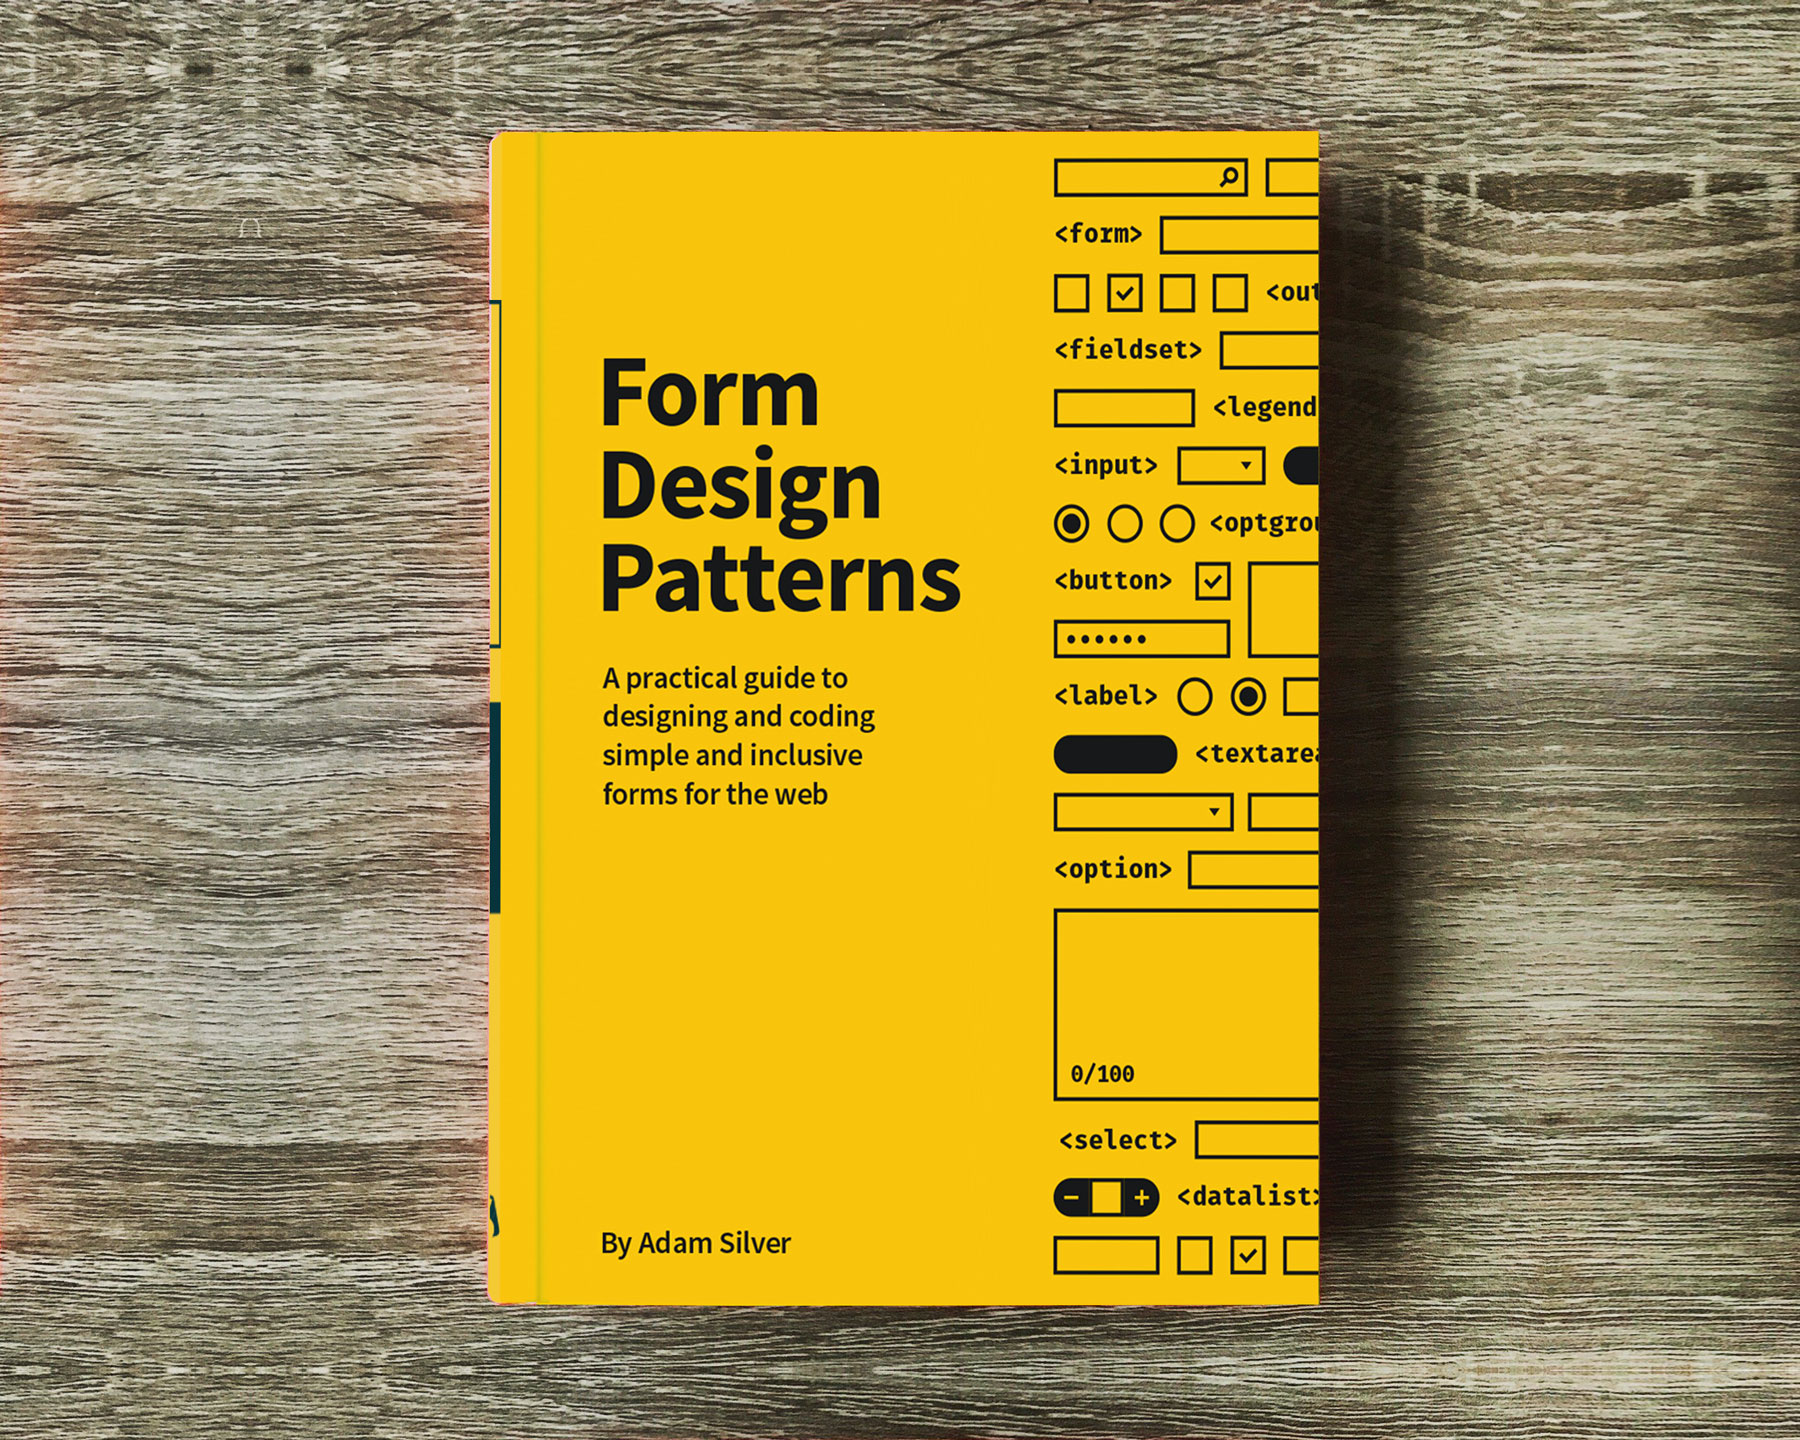 Form magazine. Pattern Design книга. Design patterns book. Webforms книга. Form Design patterns book что в книге.